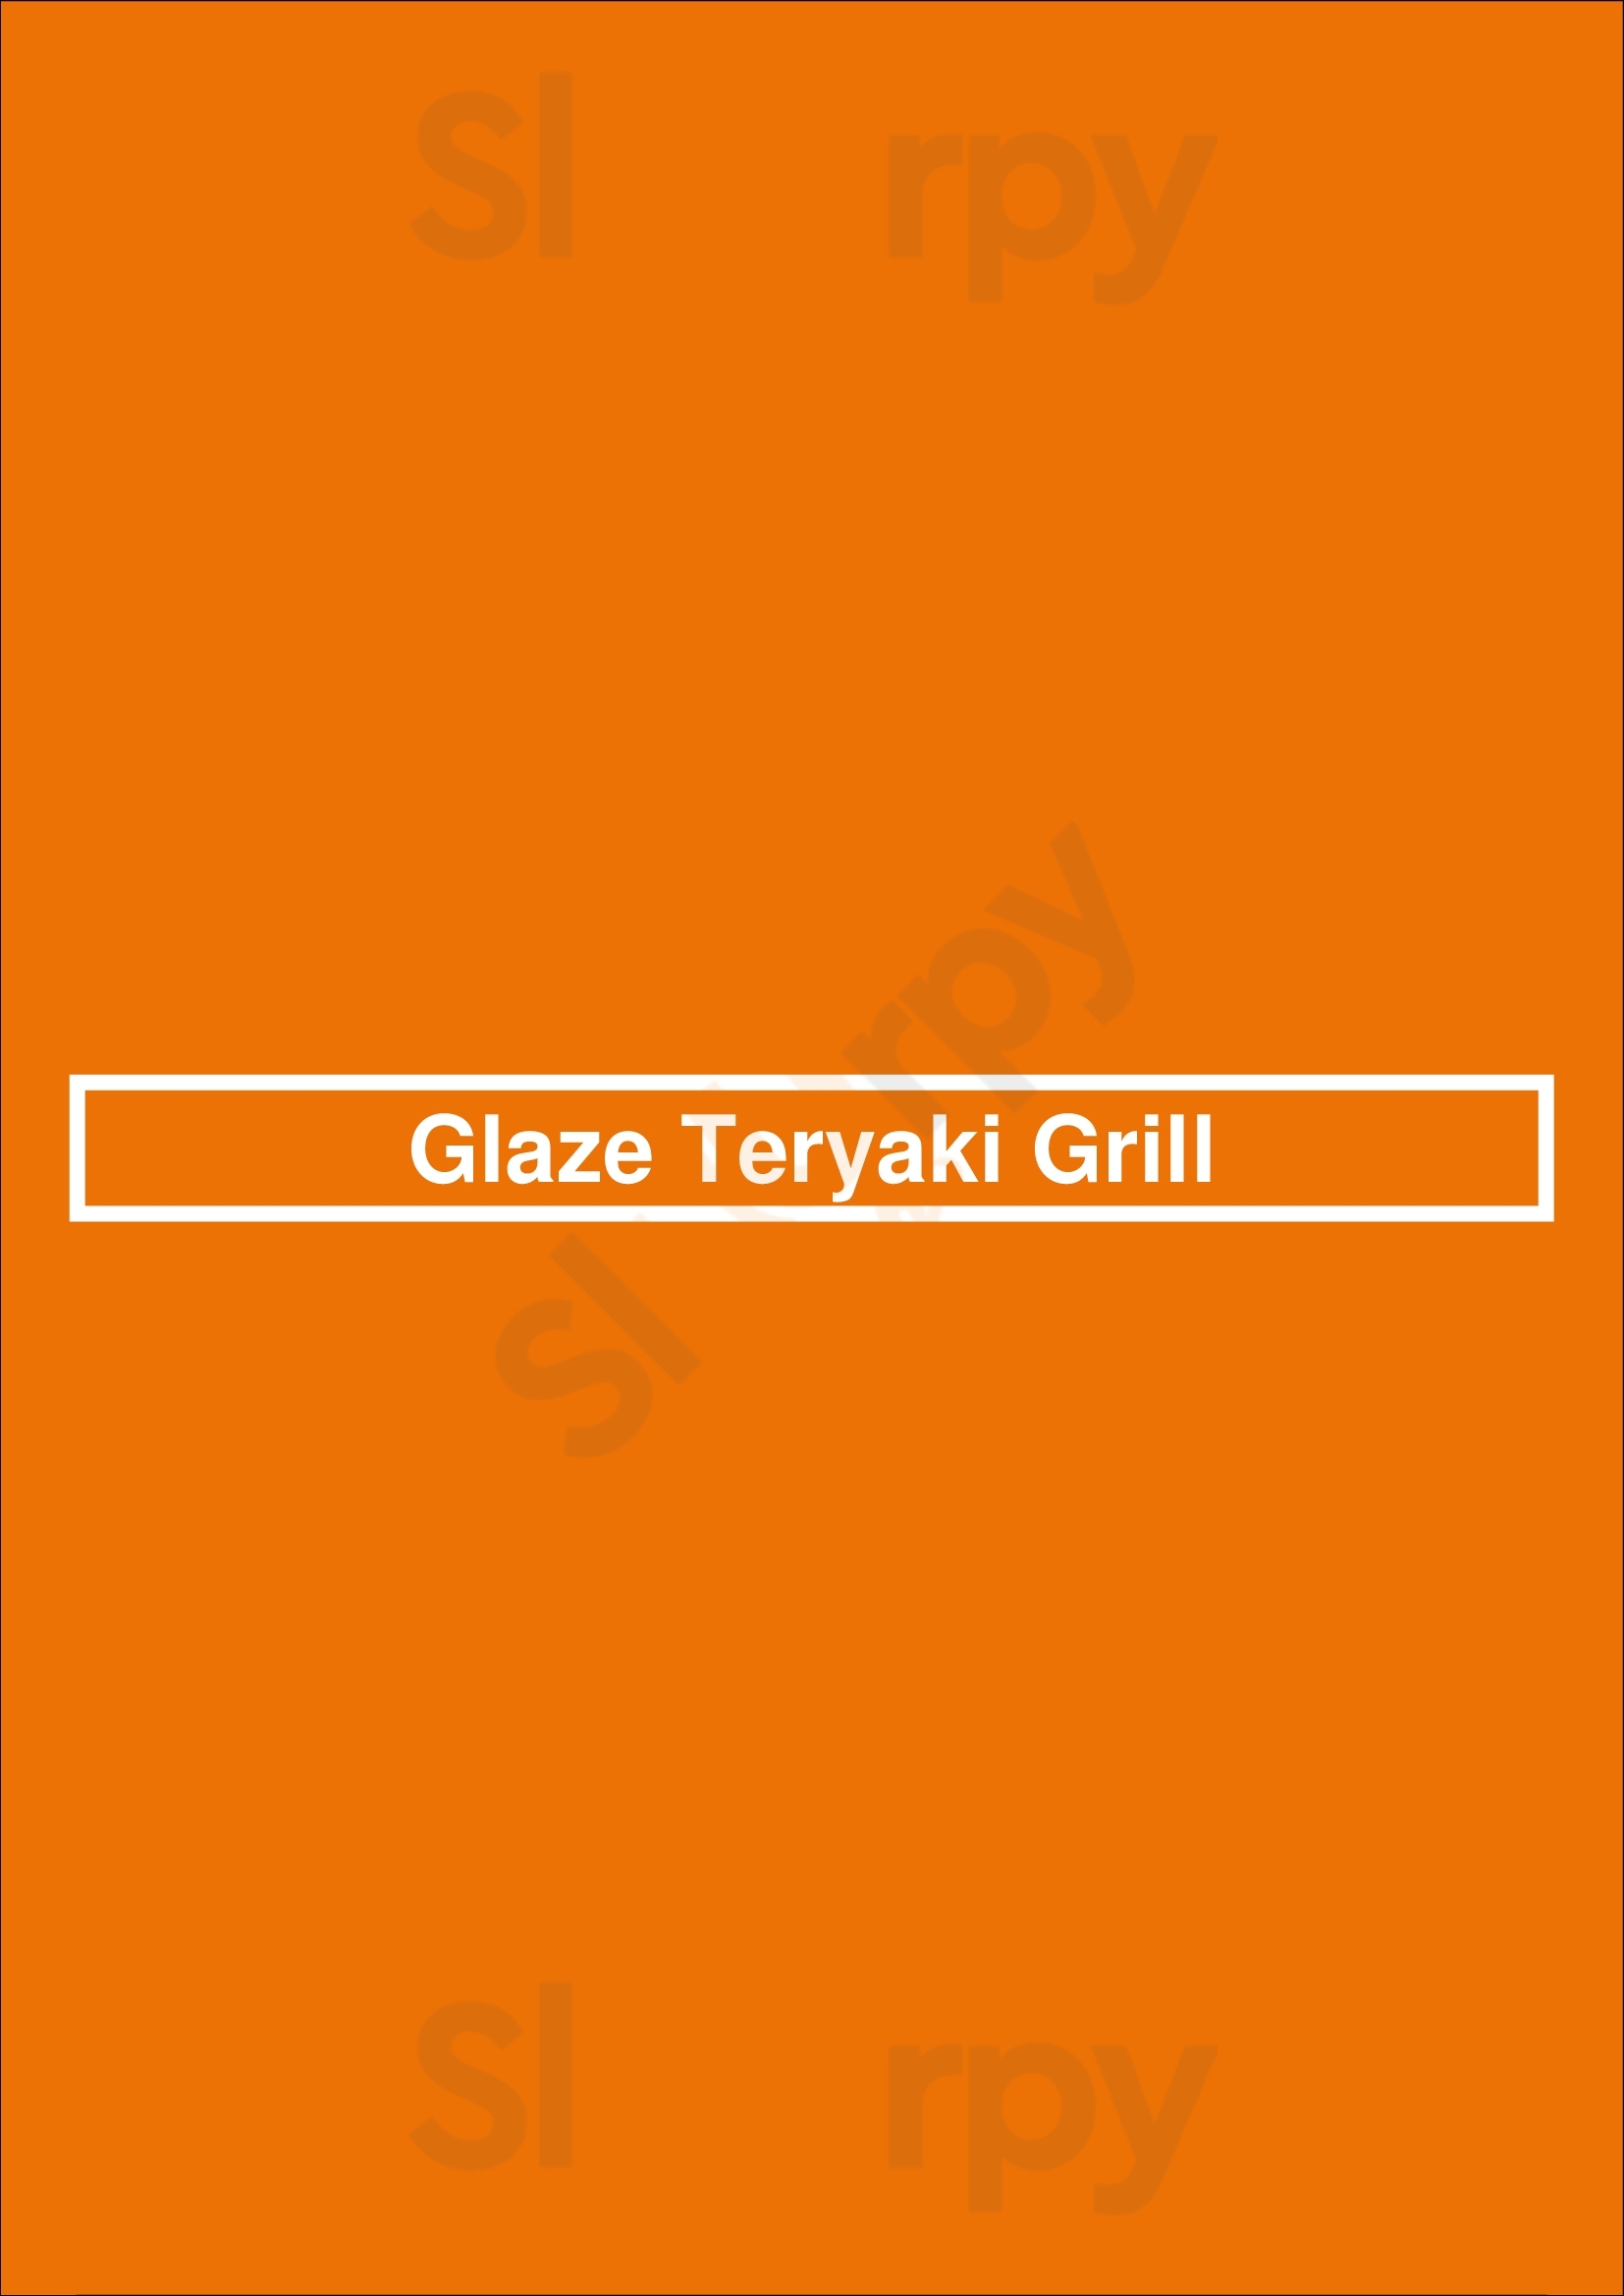 Glaze Teryaki Grill New York City Menu - 1